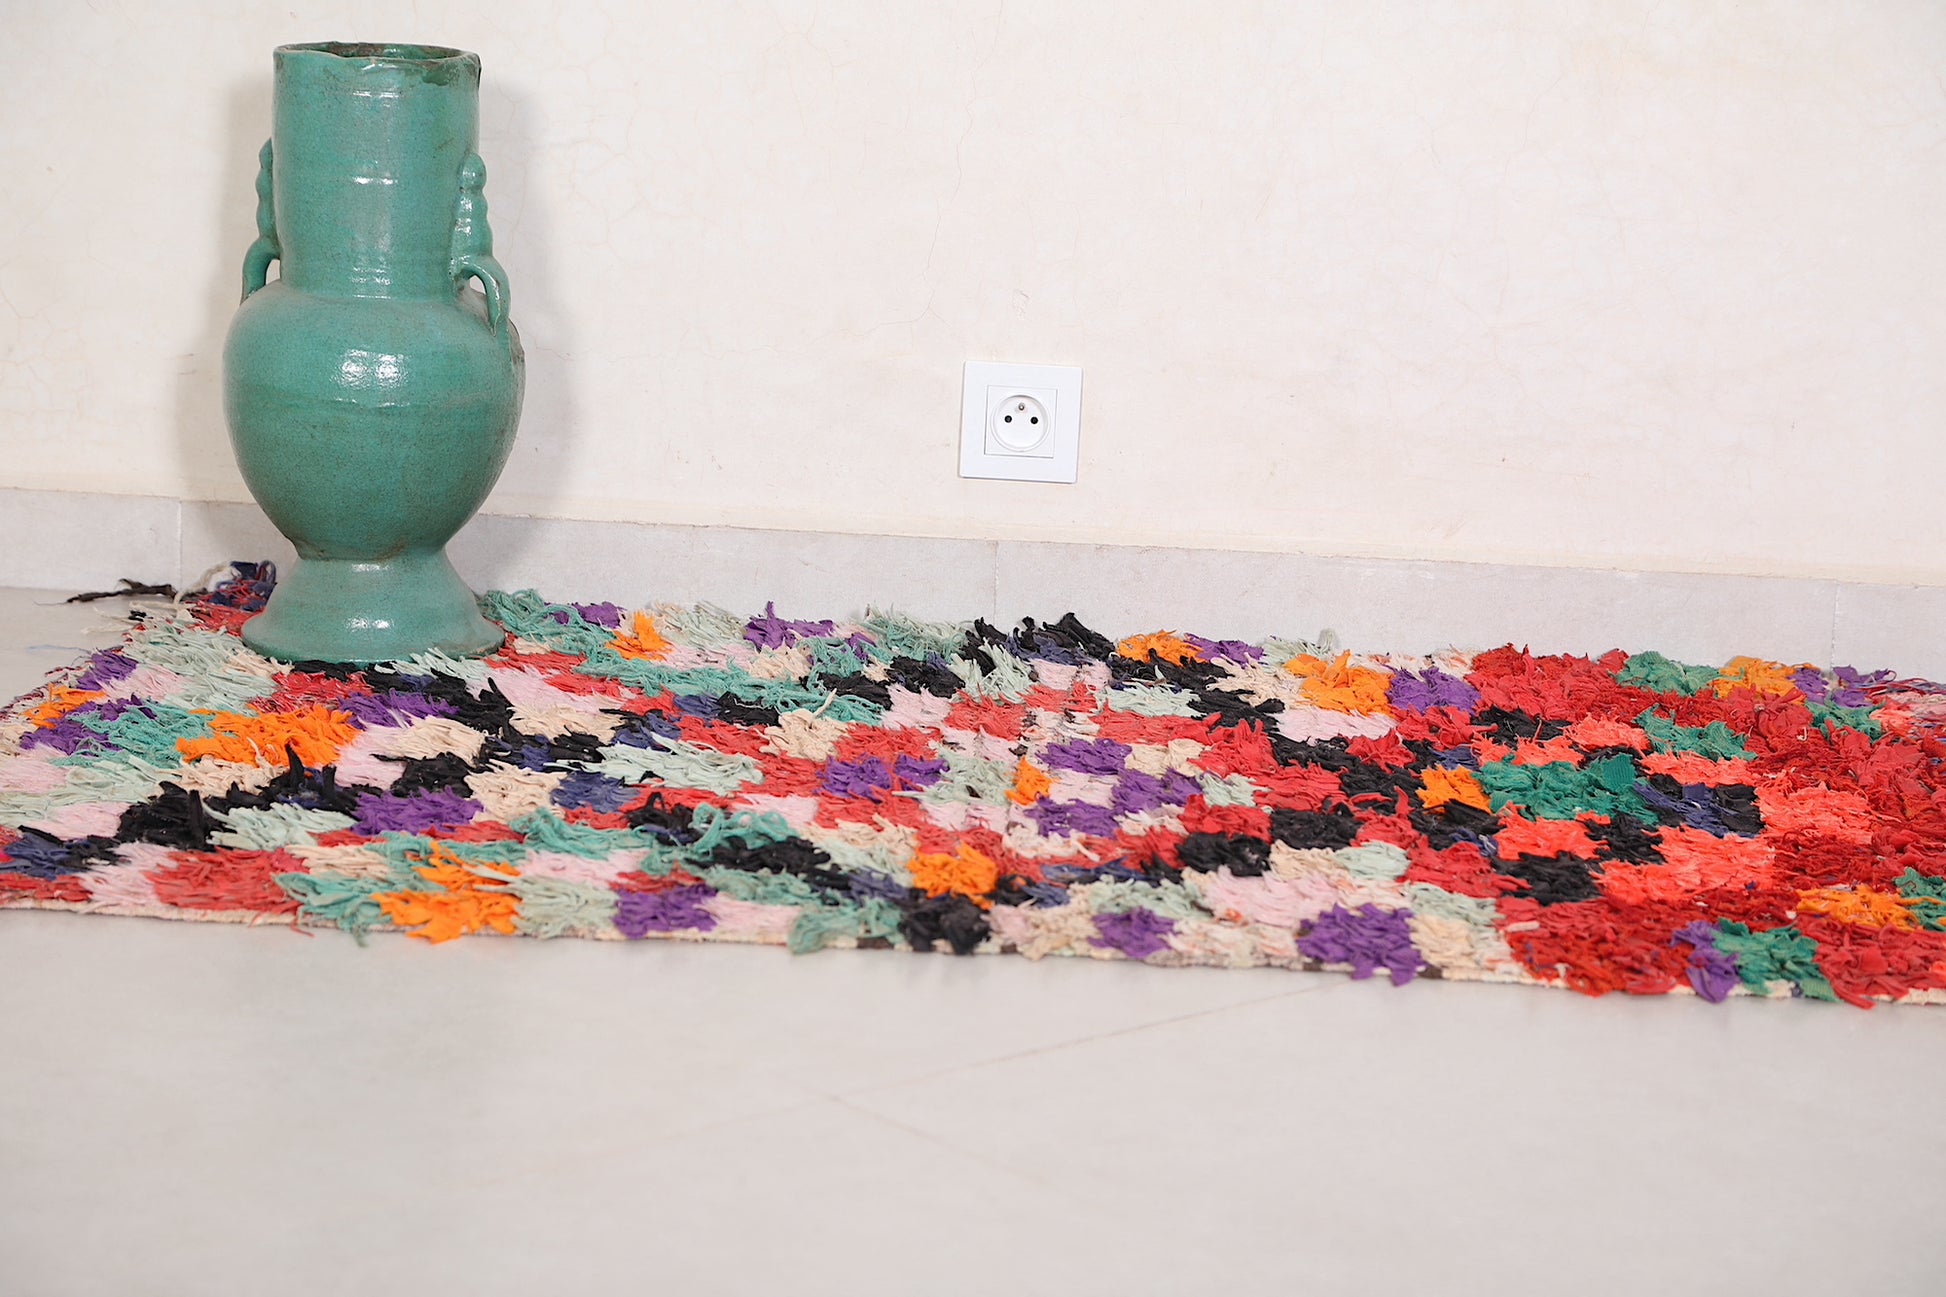 handmade boucherouite rug 2.6 X 4.1 Feet